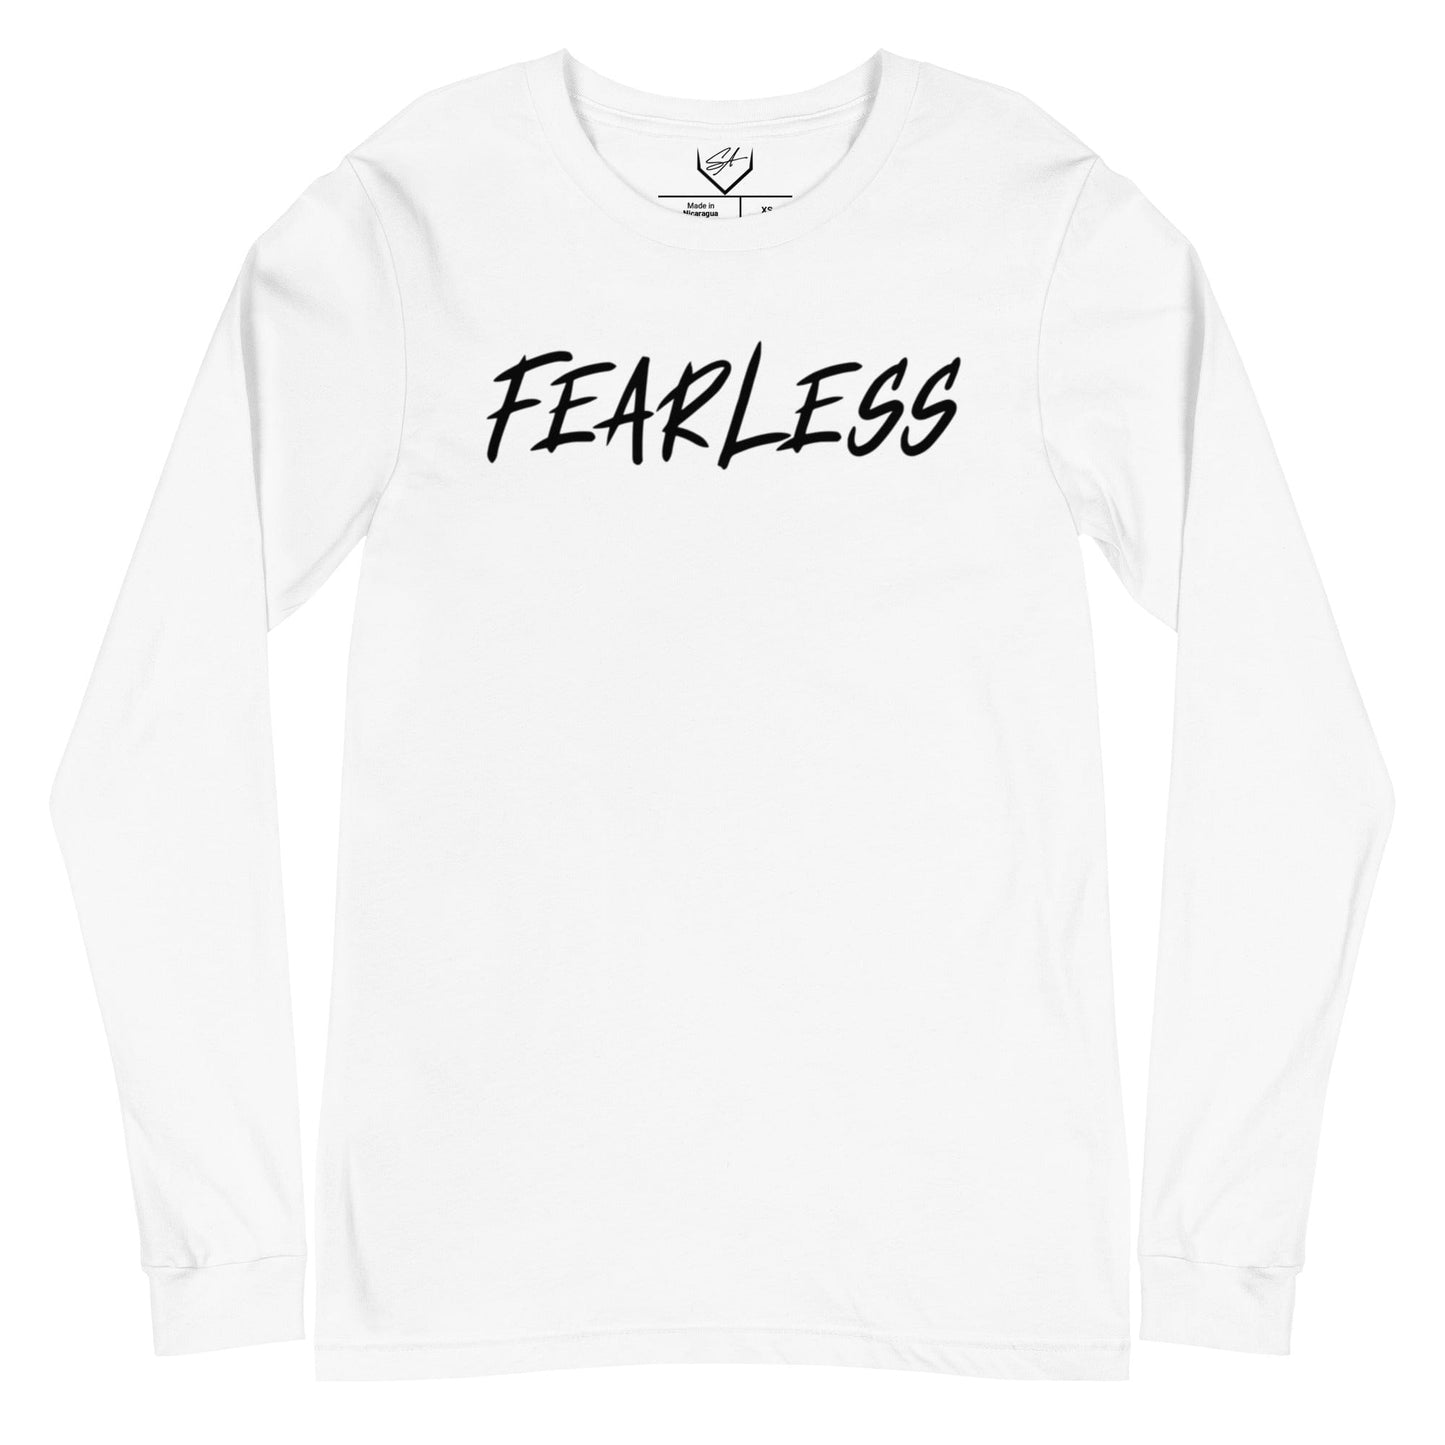 Fearless - Adult Long Sleeve